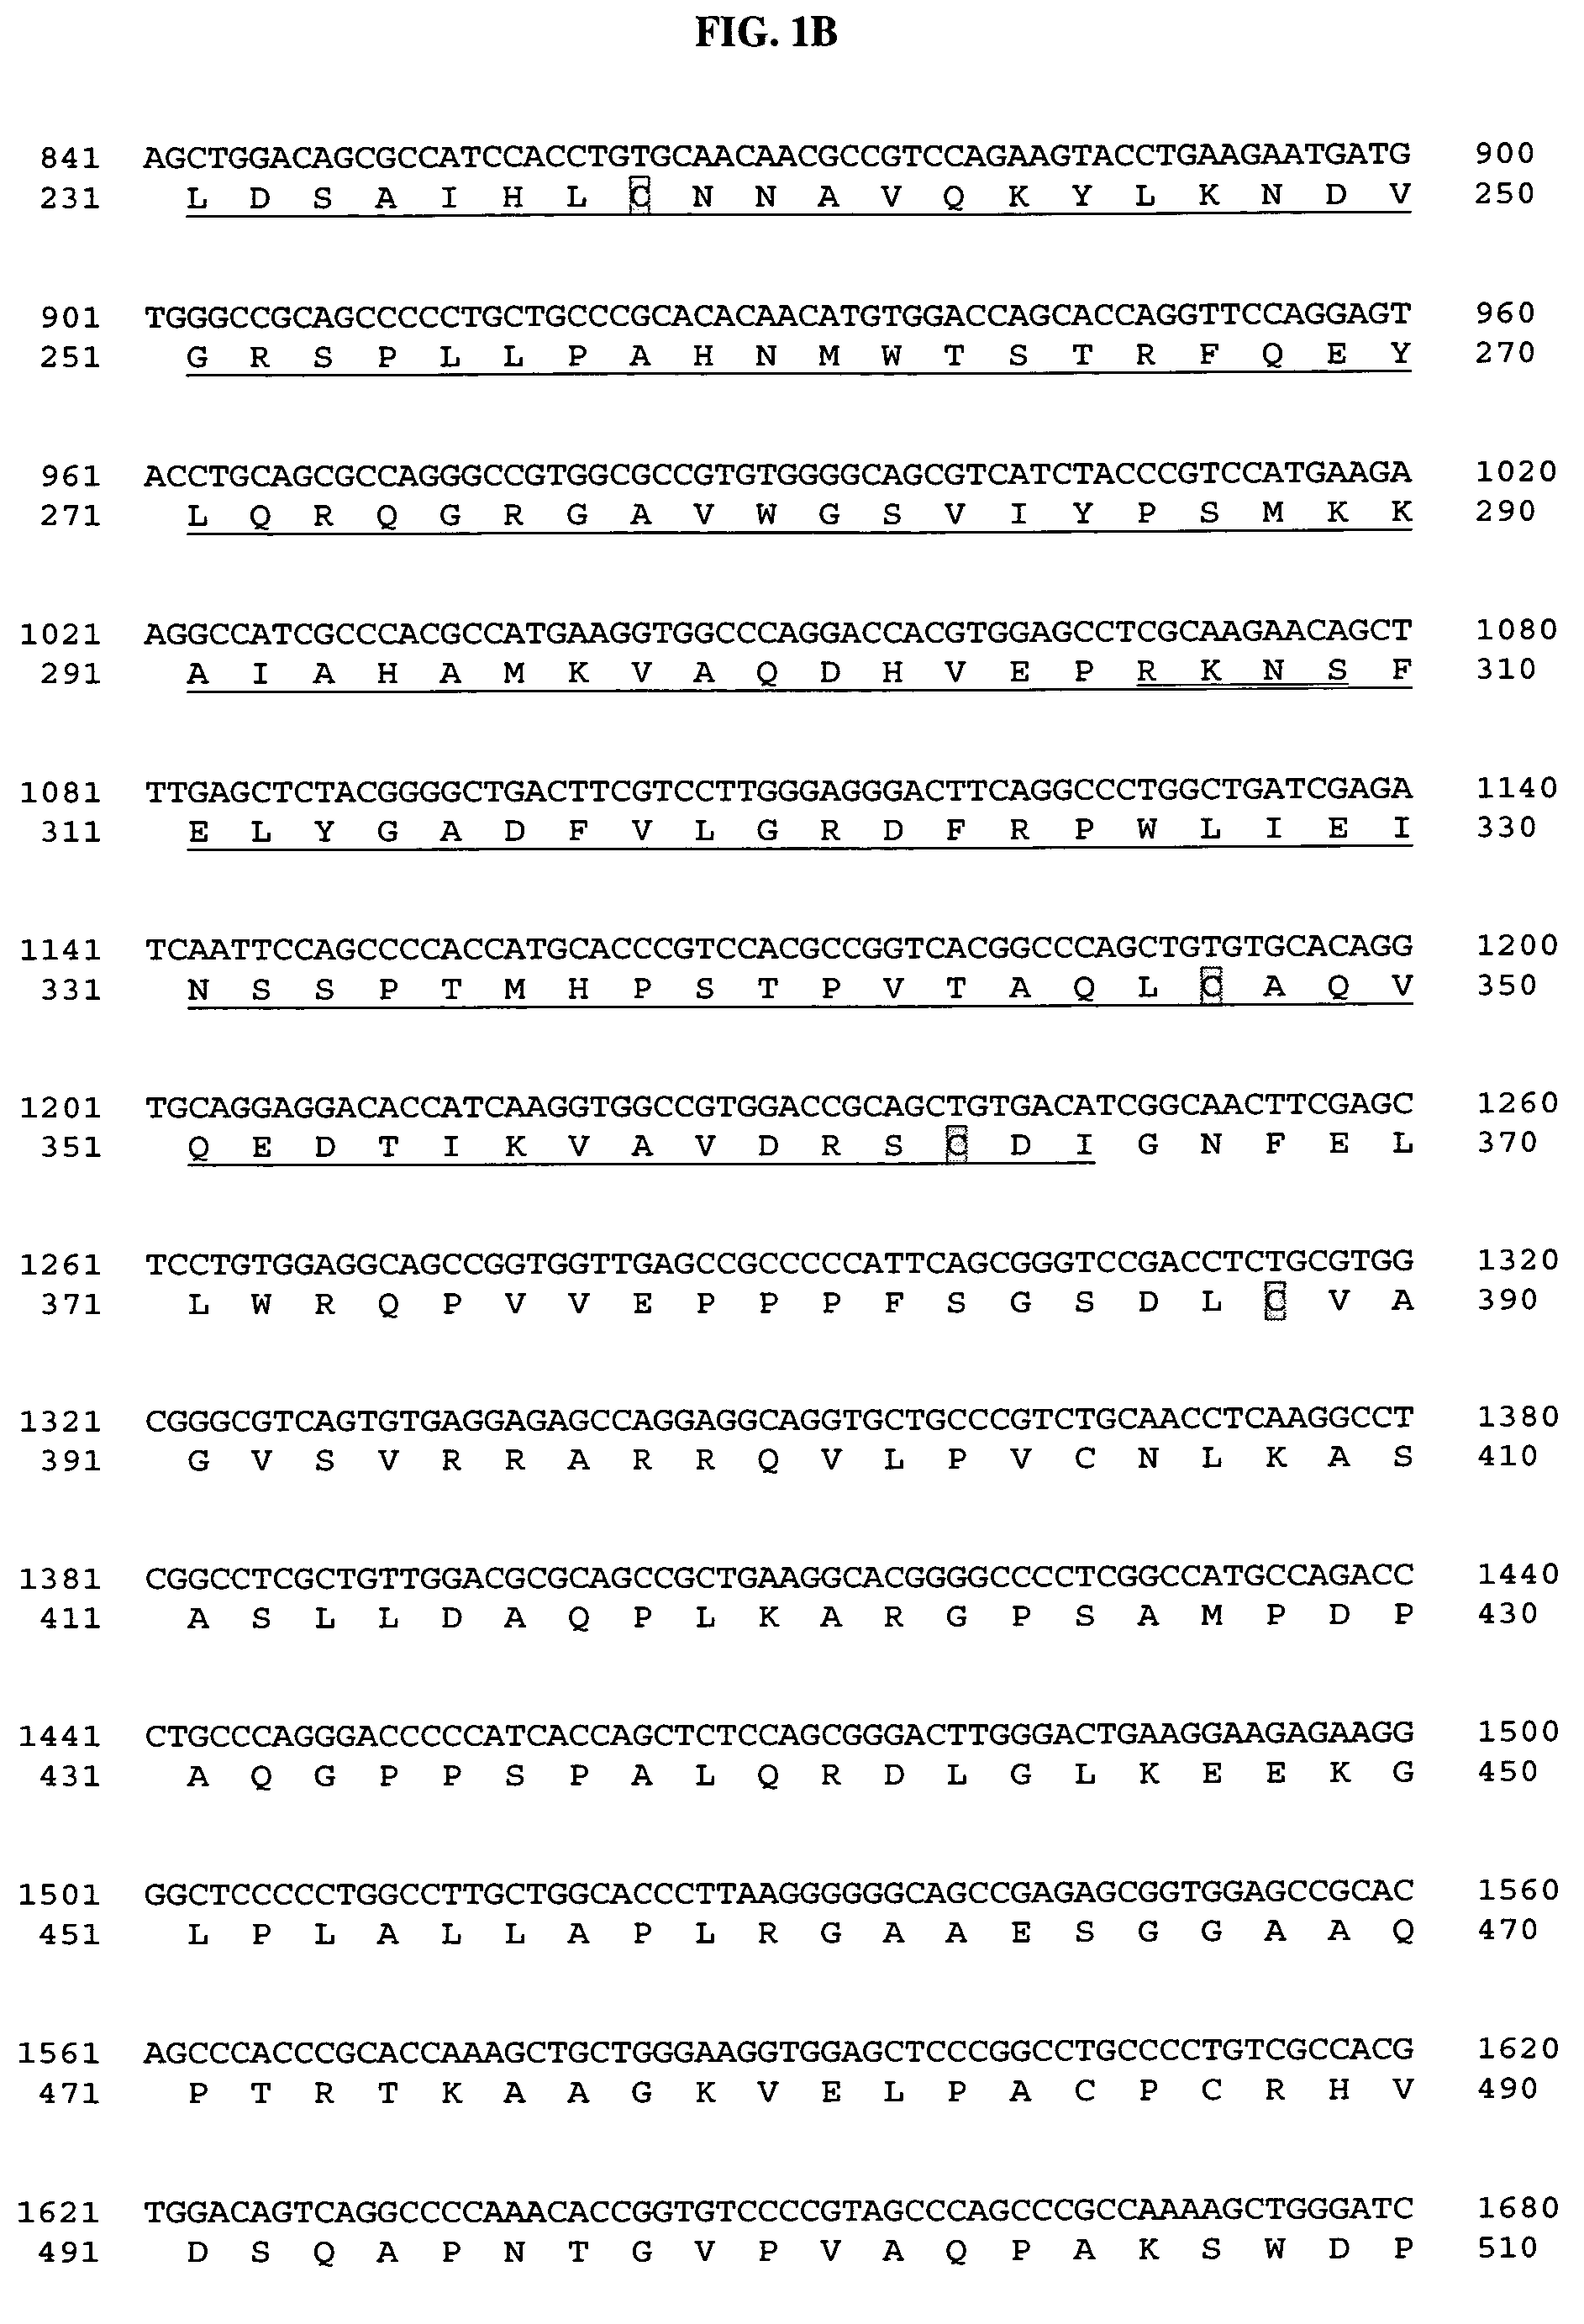 Polynucleotides encoding a novel testis-specific tubulin tyrosine-ligase-like protein, BGS42